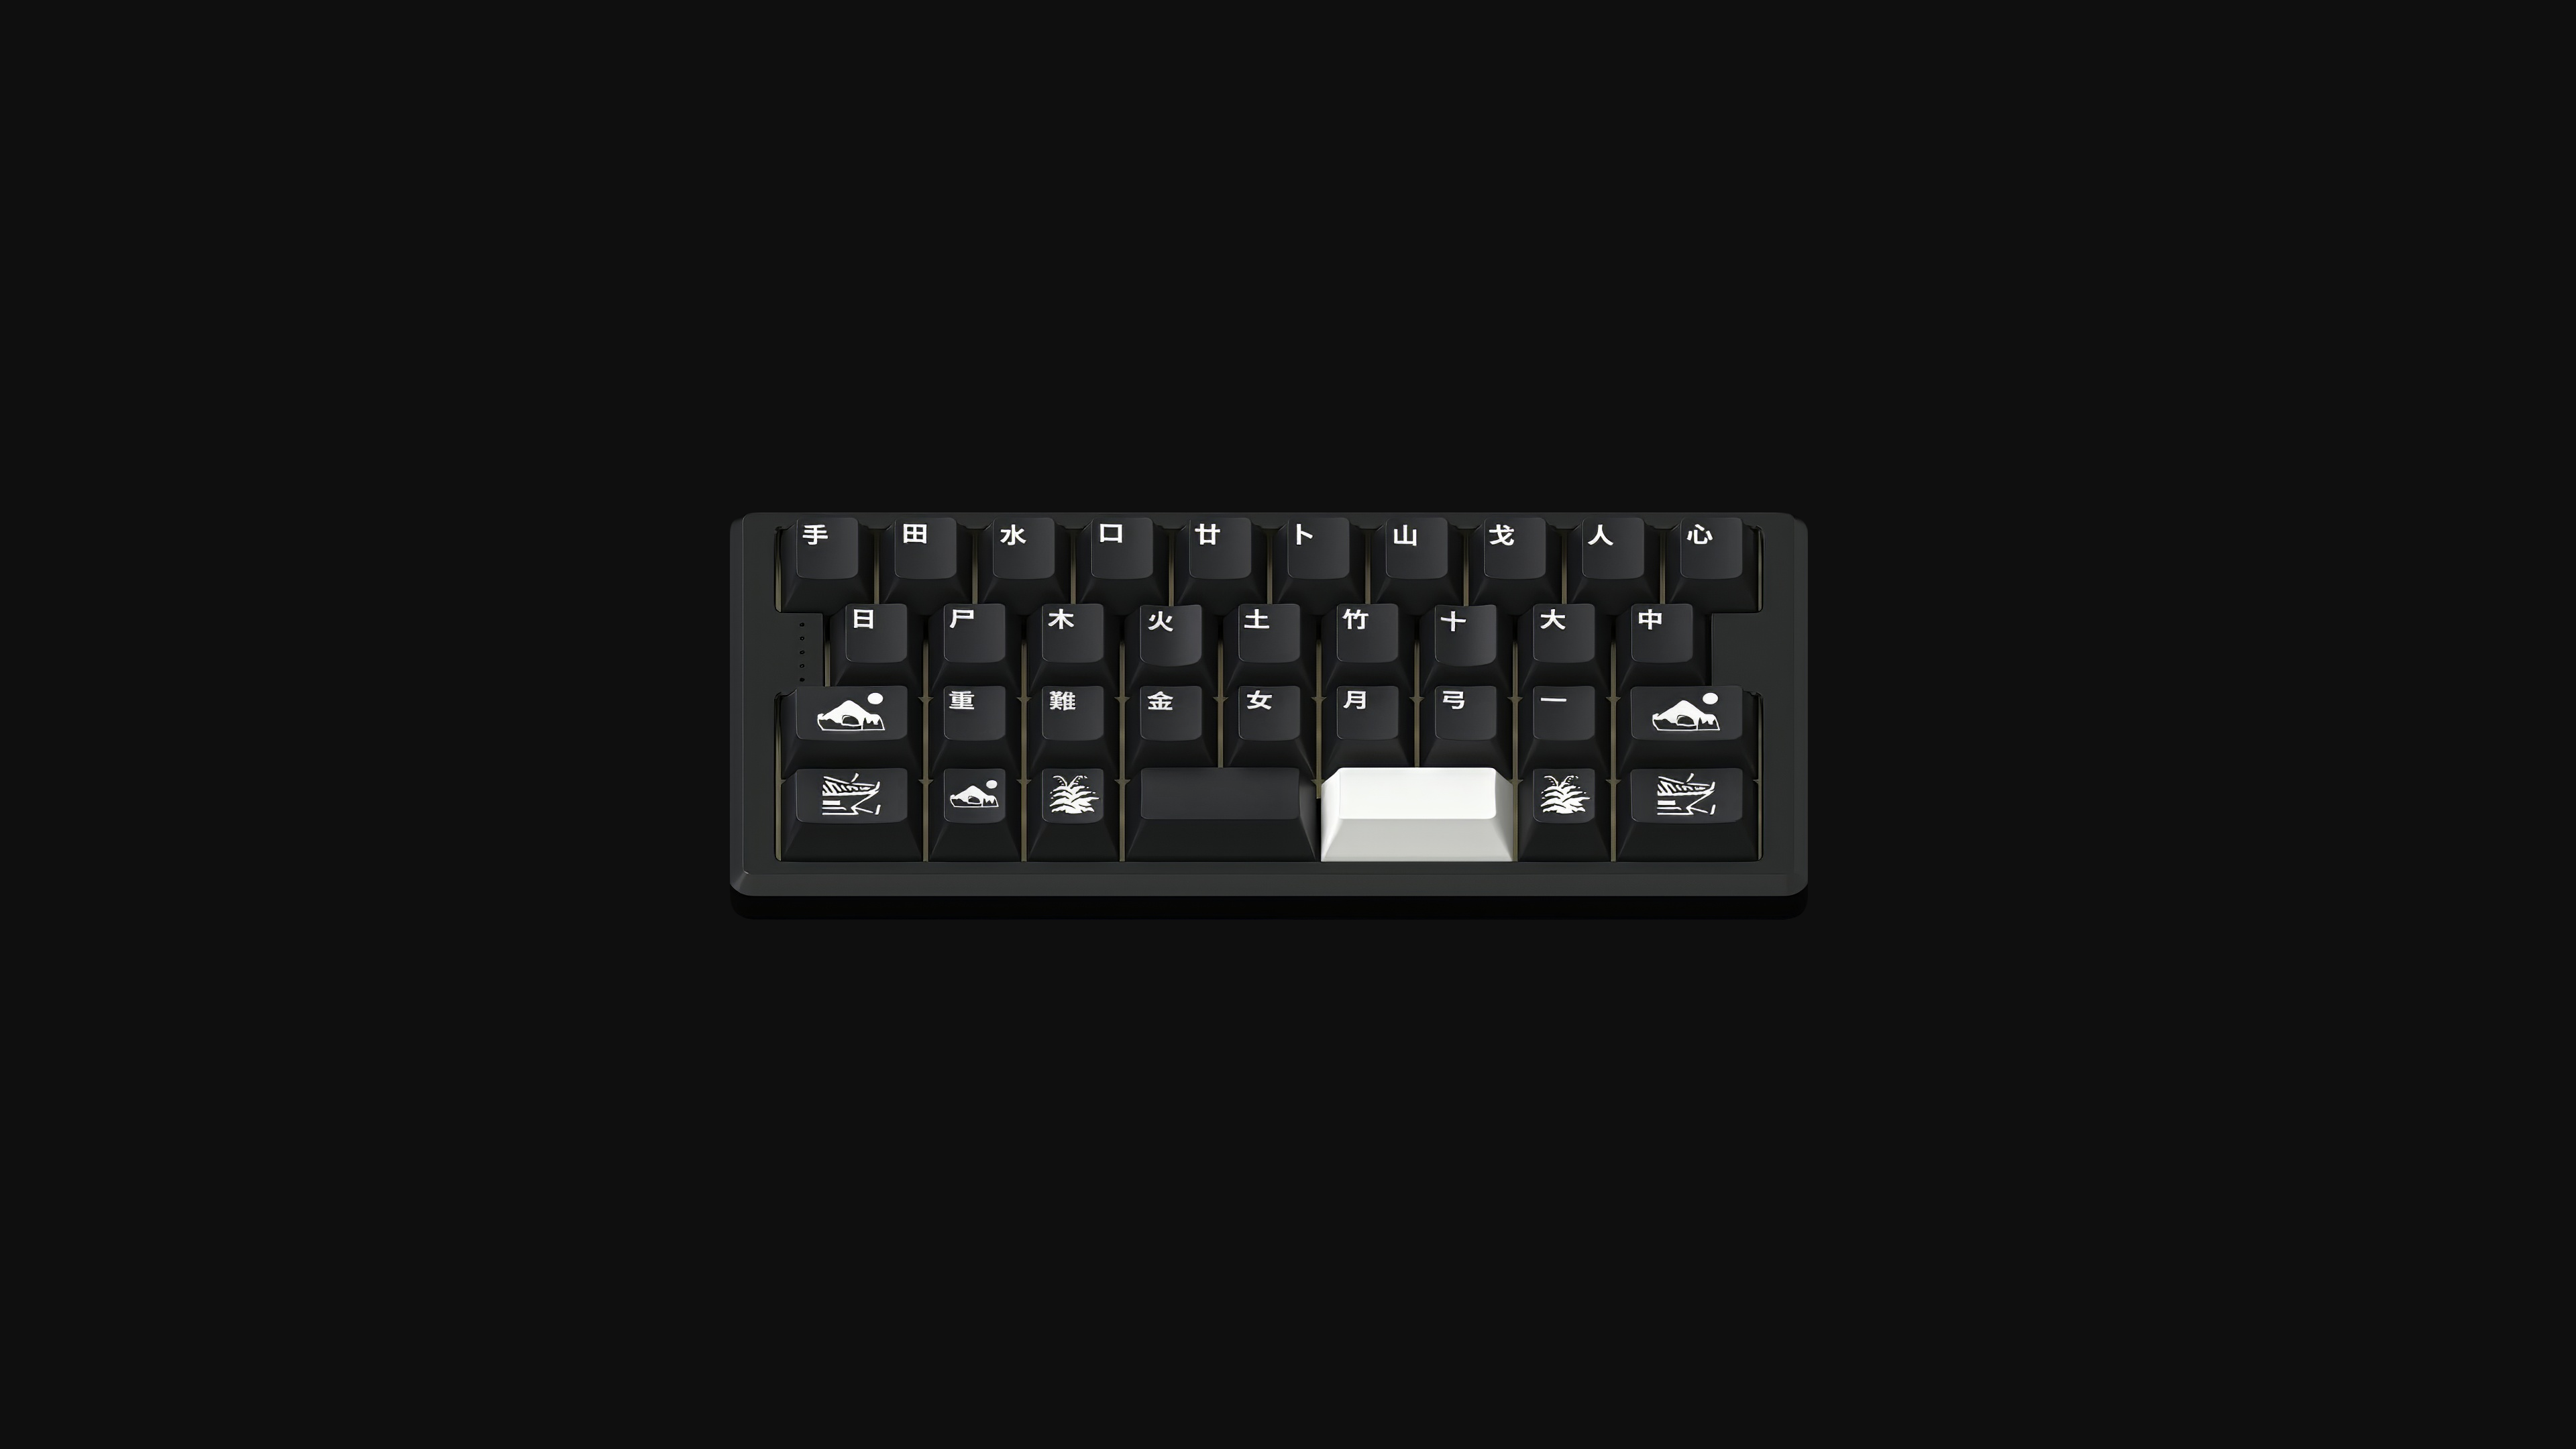 General 3840x2160 keyboards minimalism technology digital art simple background black background Japanese characters